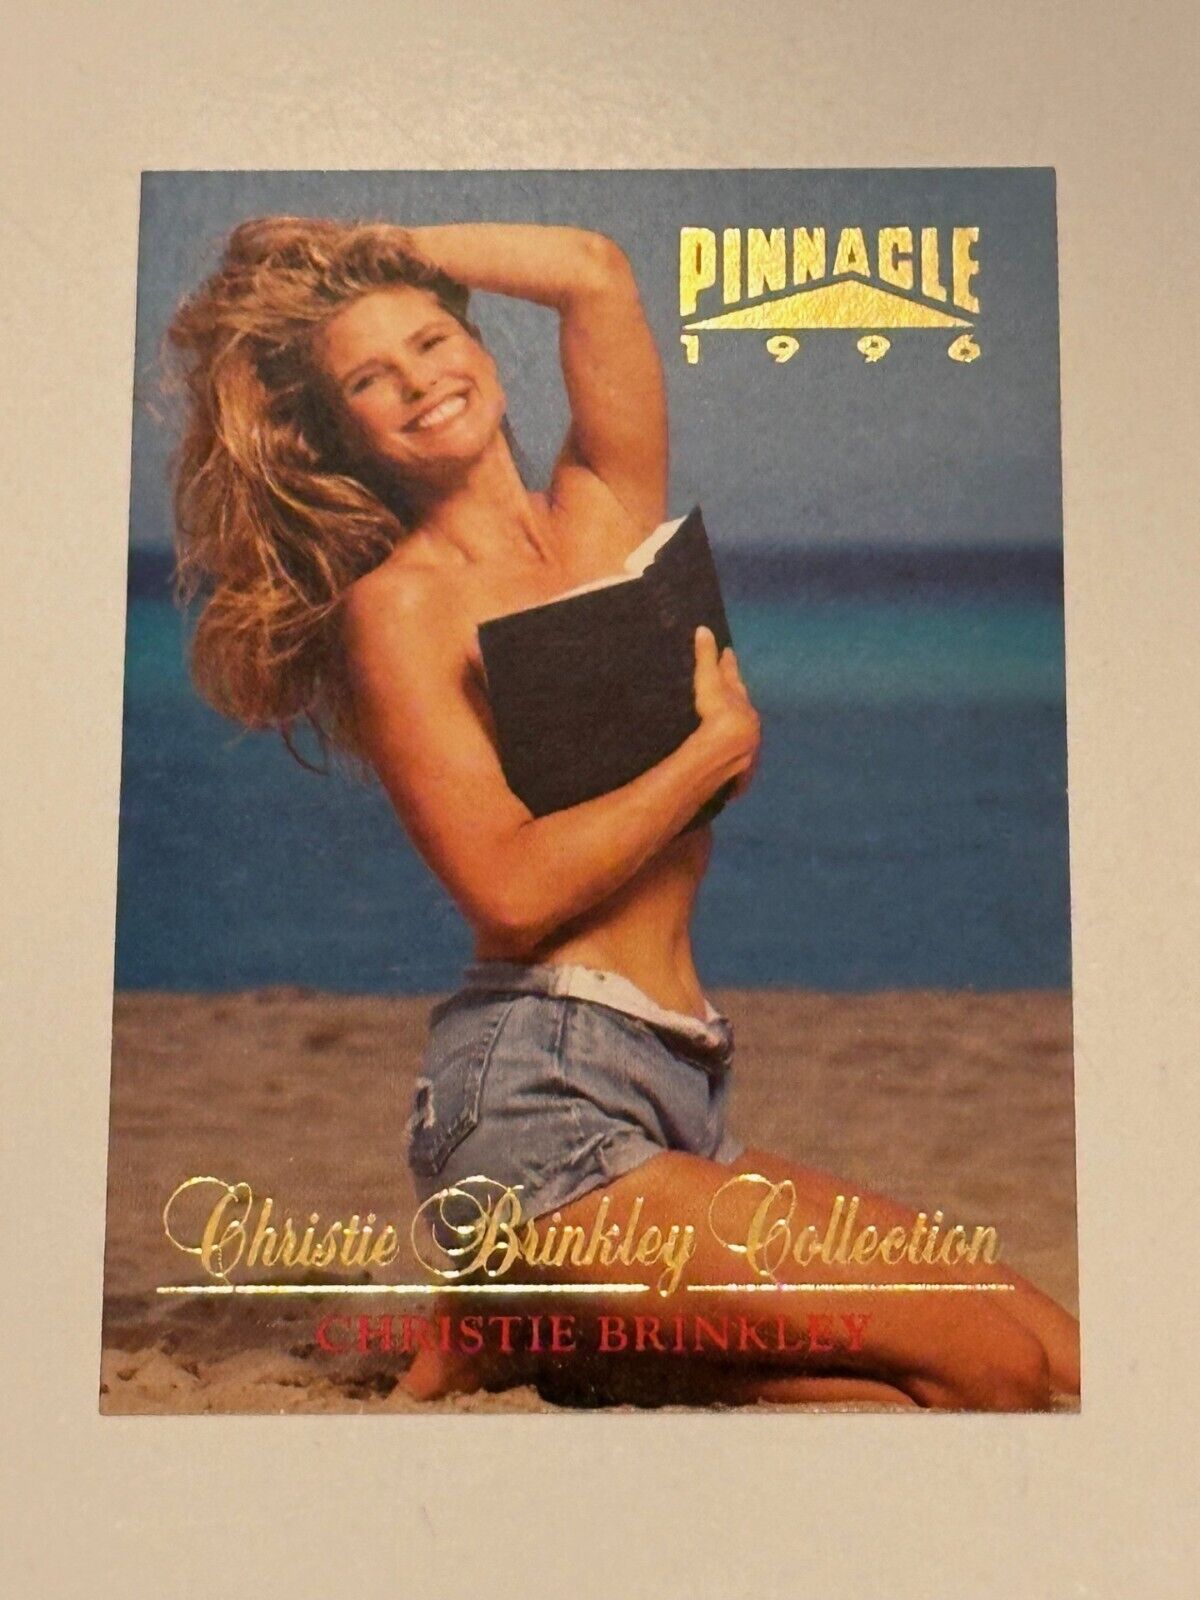 1996 Pinnacle Baseball Series 2 Christie Brinkley Collection Rare Promo Card